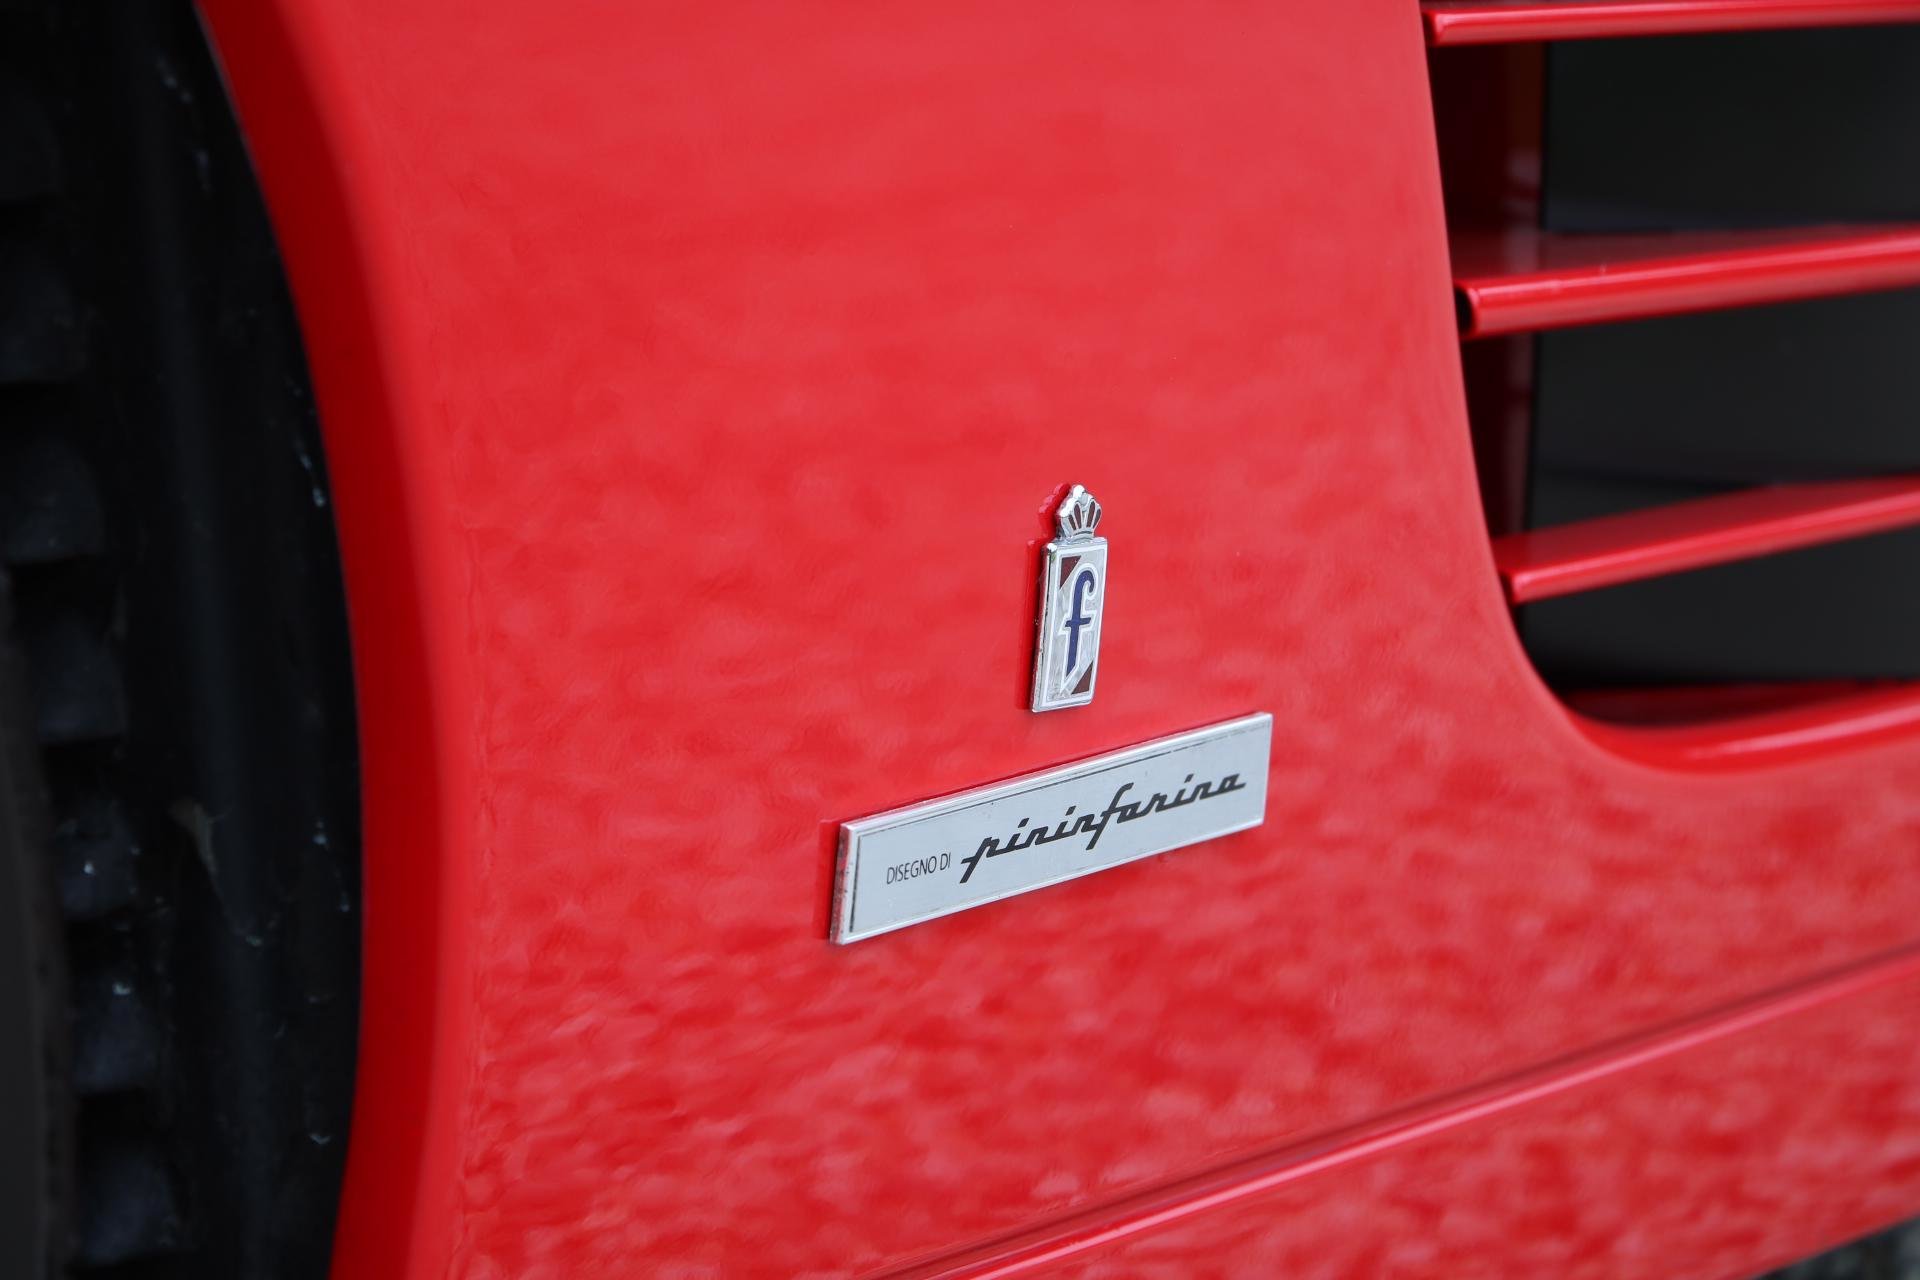 Real Art on Wheels | Ferrari 512 TR